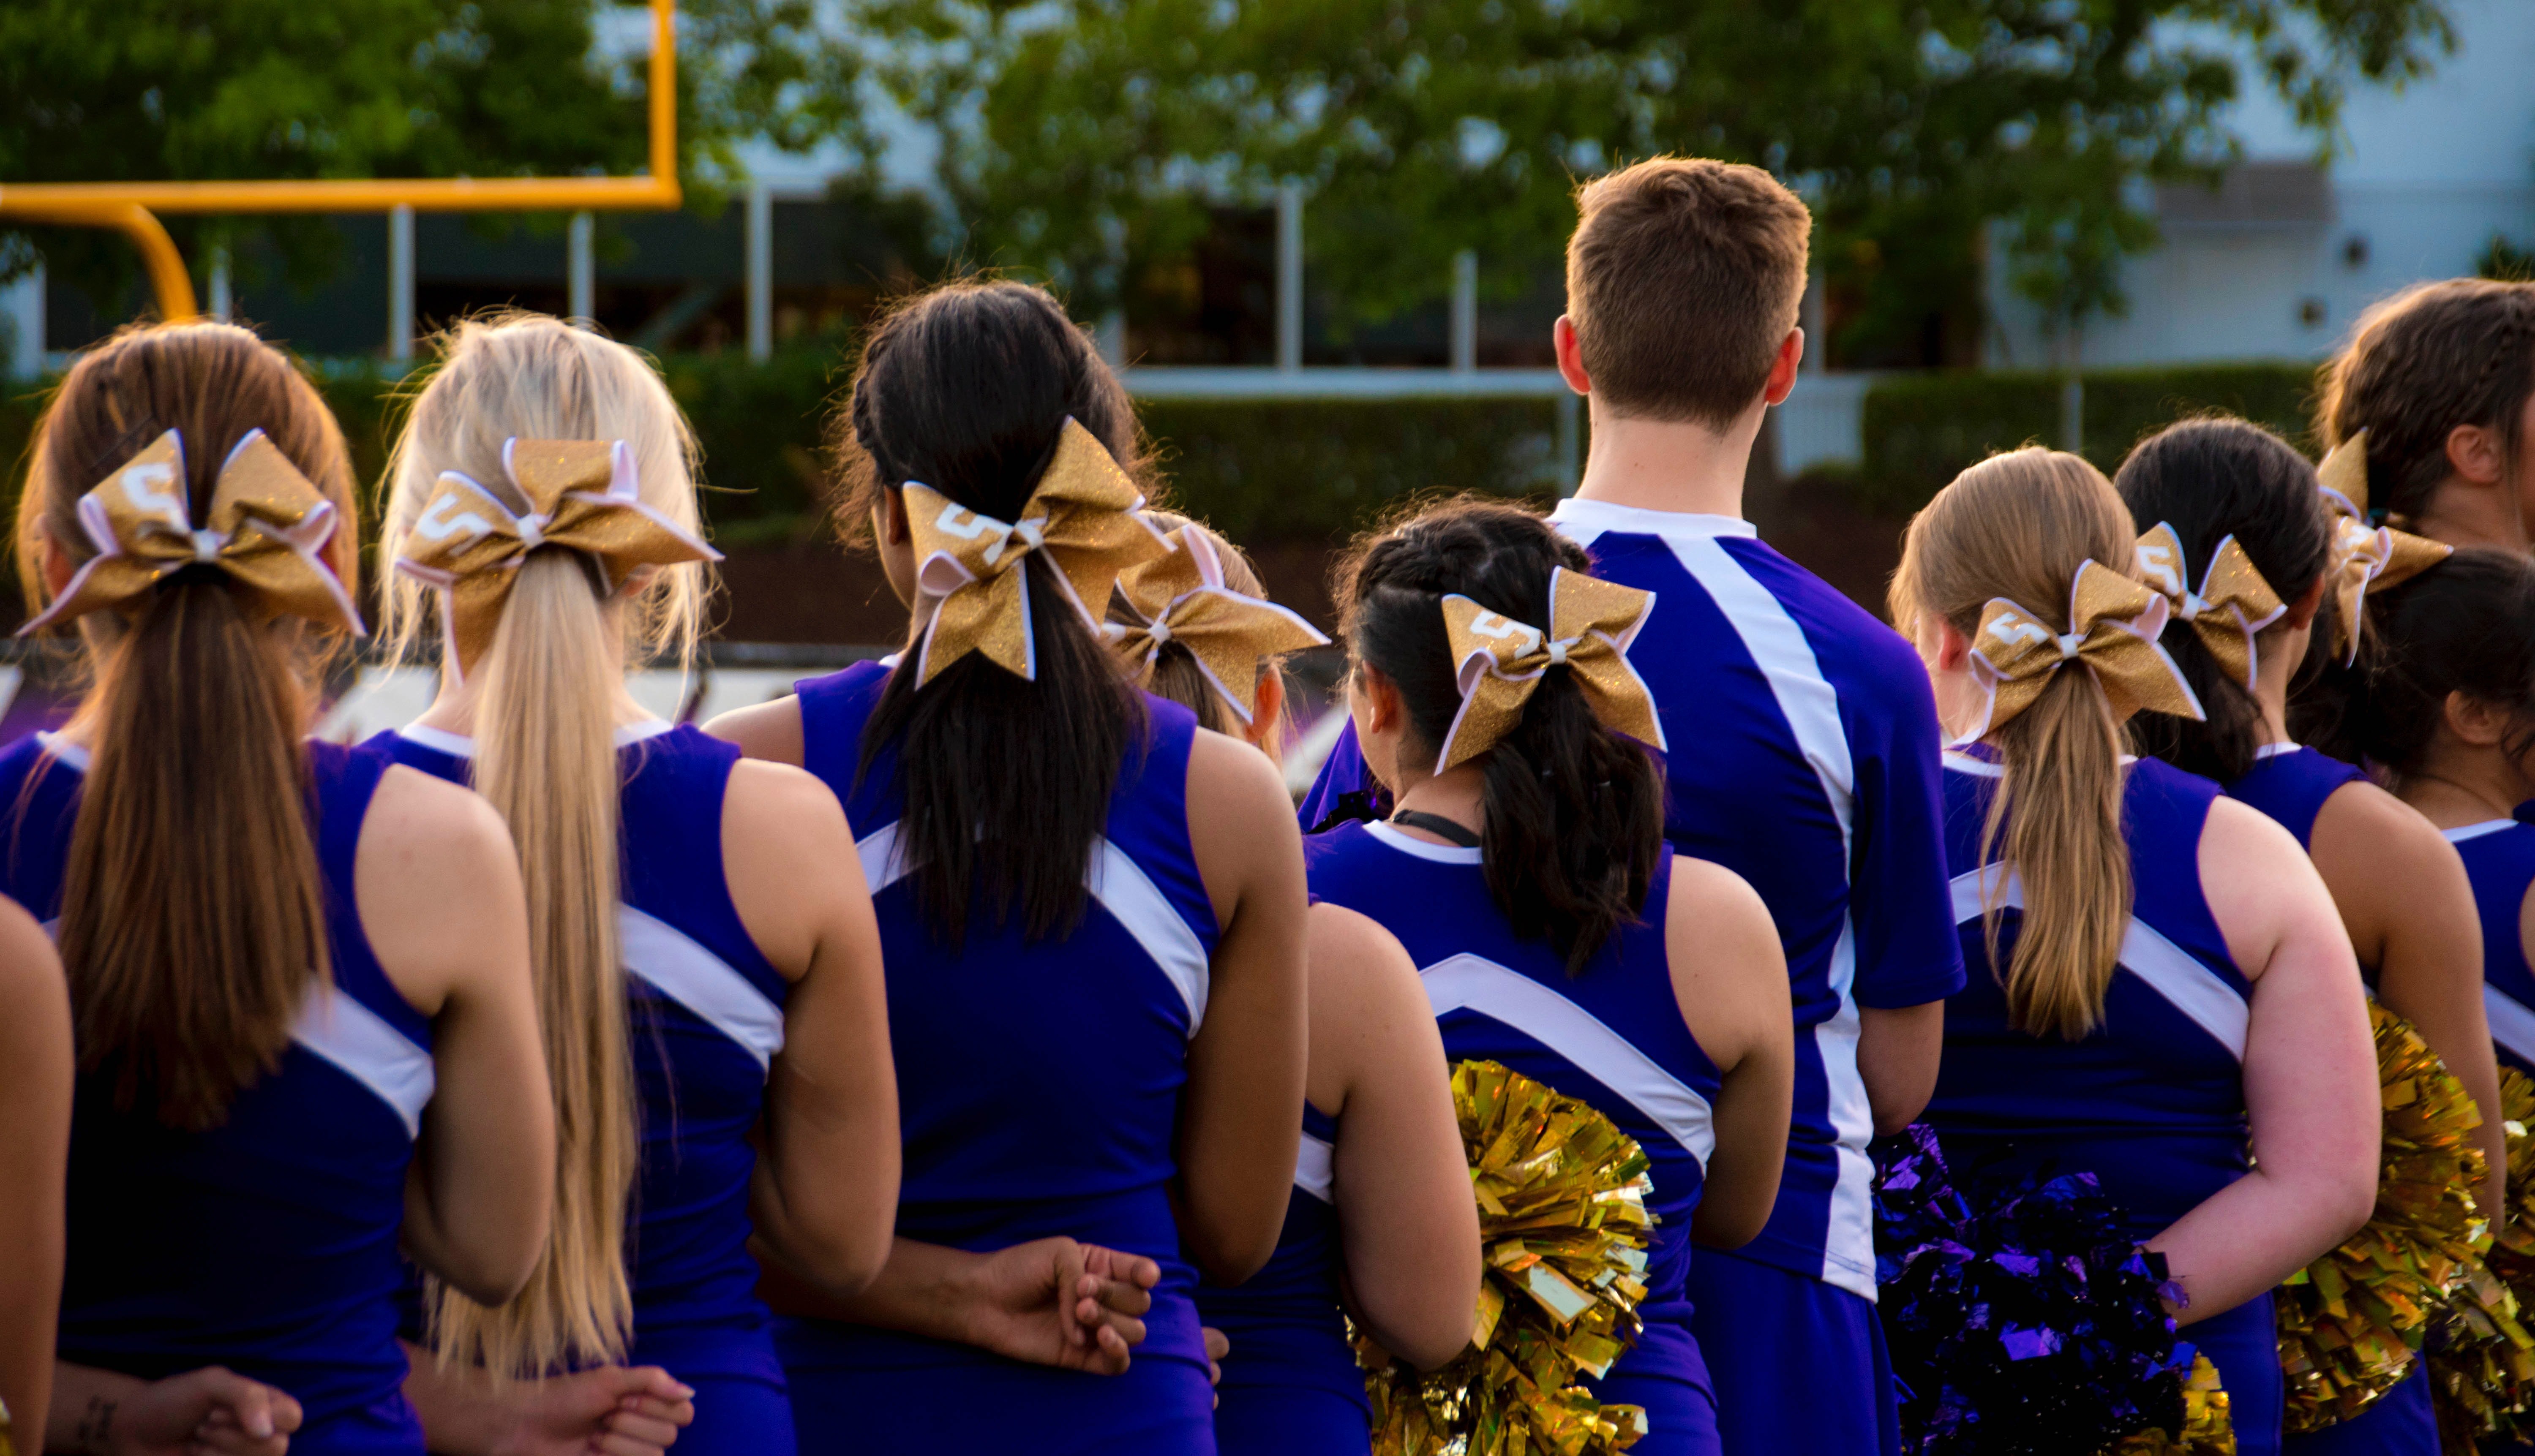 A group of cheerleaders. | Source: Pexels/AshleyWilliams